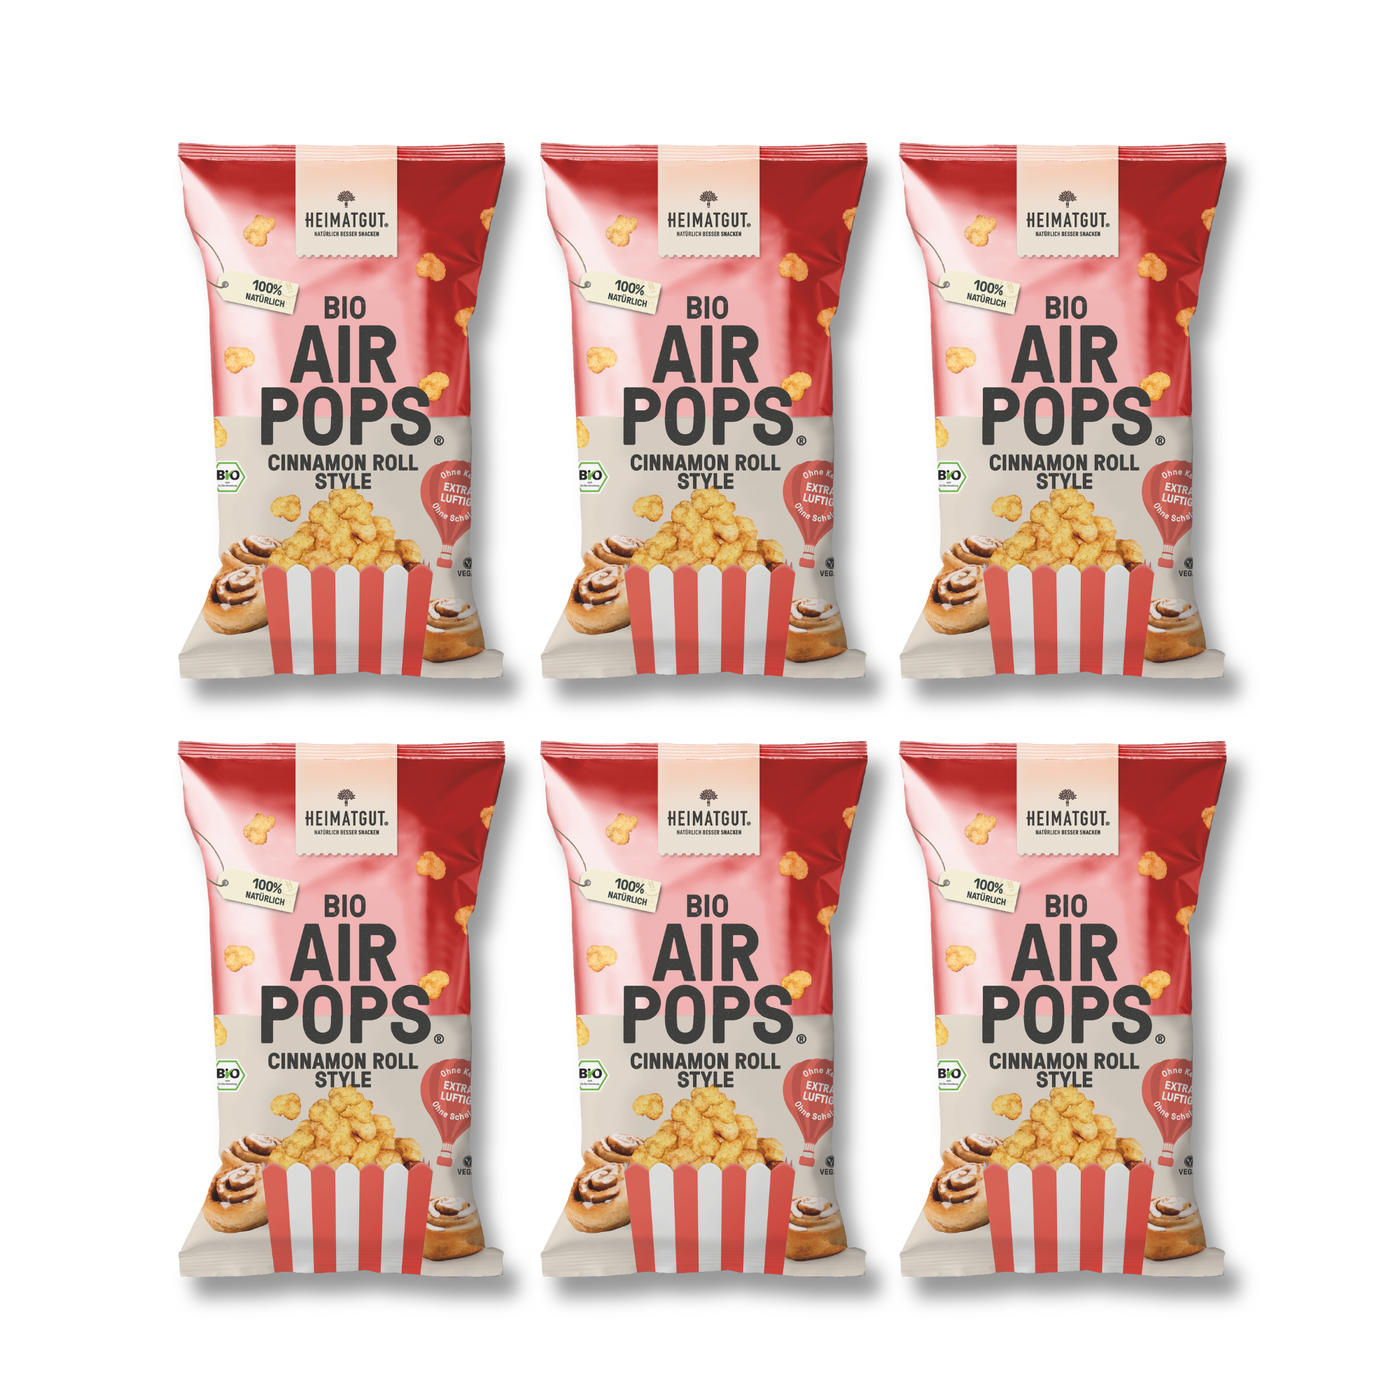 Bio AirPops Cinnamon Roll Style